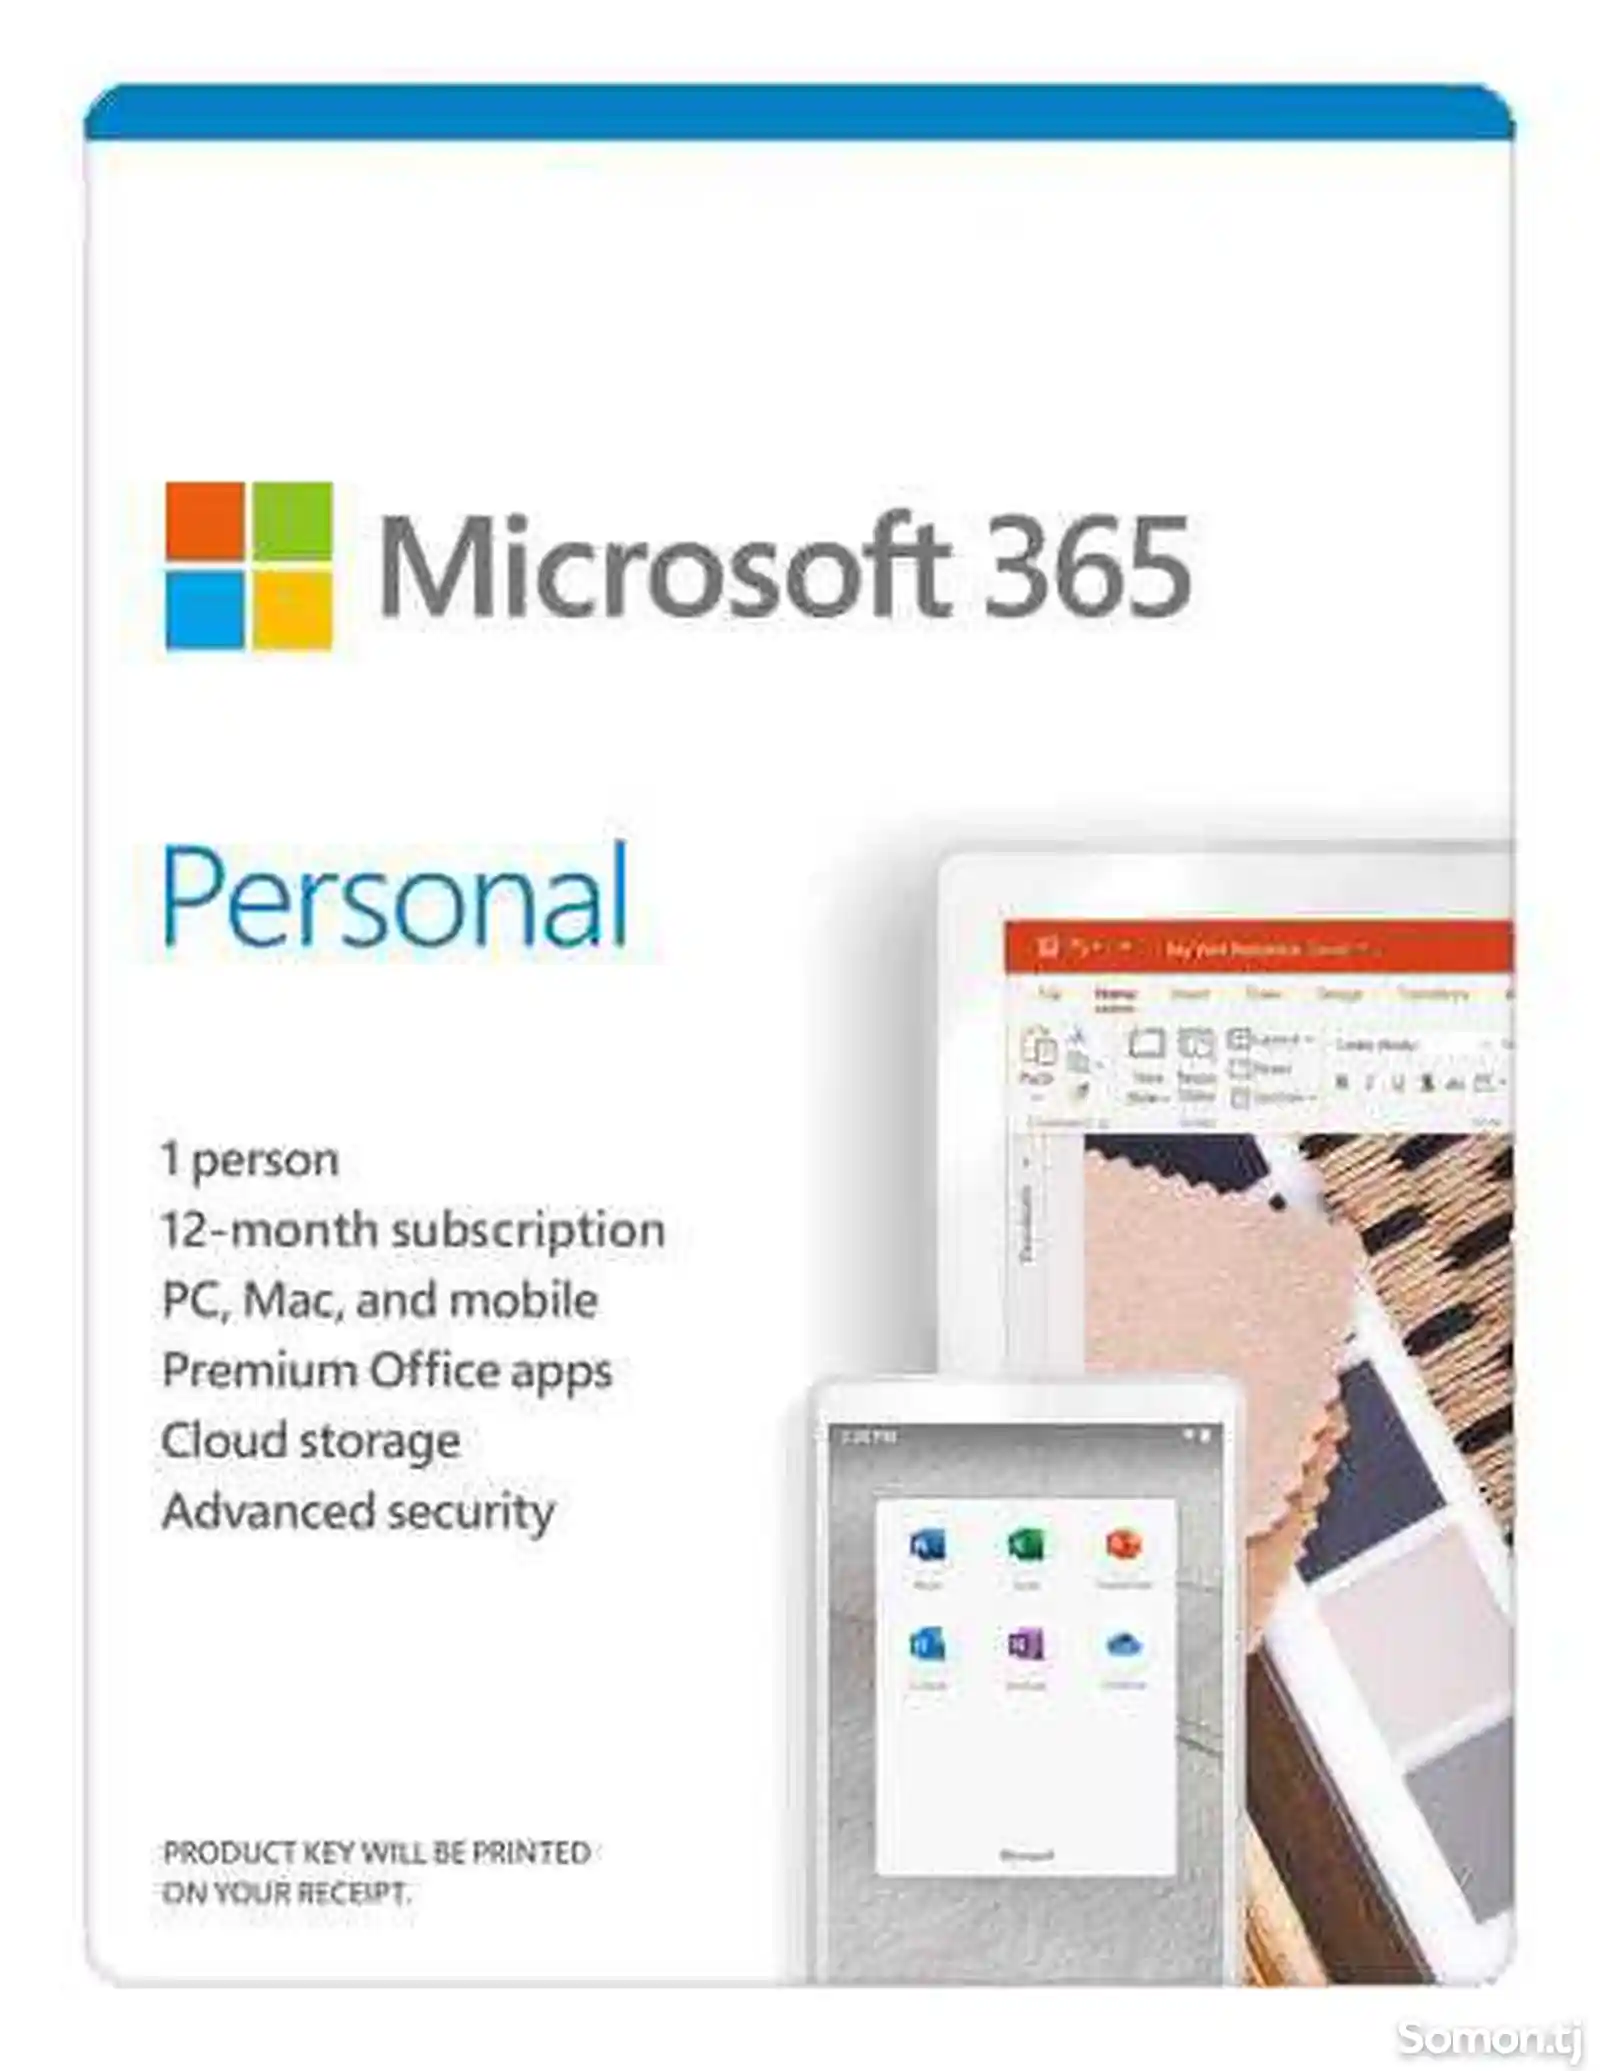 Microsoft 365 Personal - иҷозатнома барои 1 роёна, 1 сол